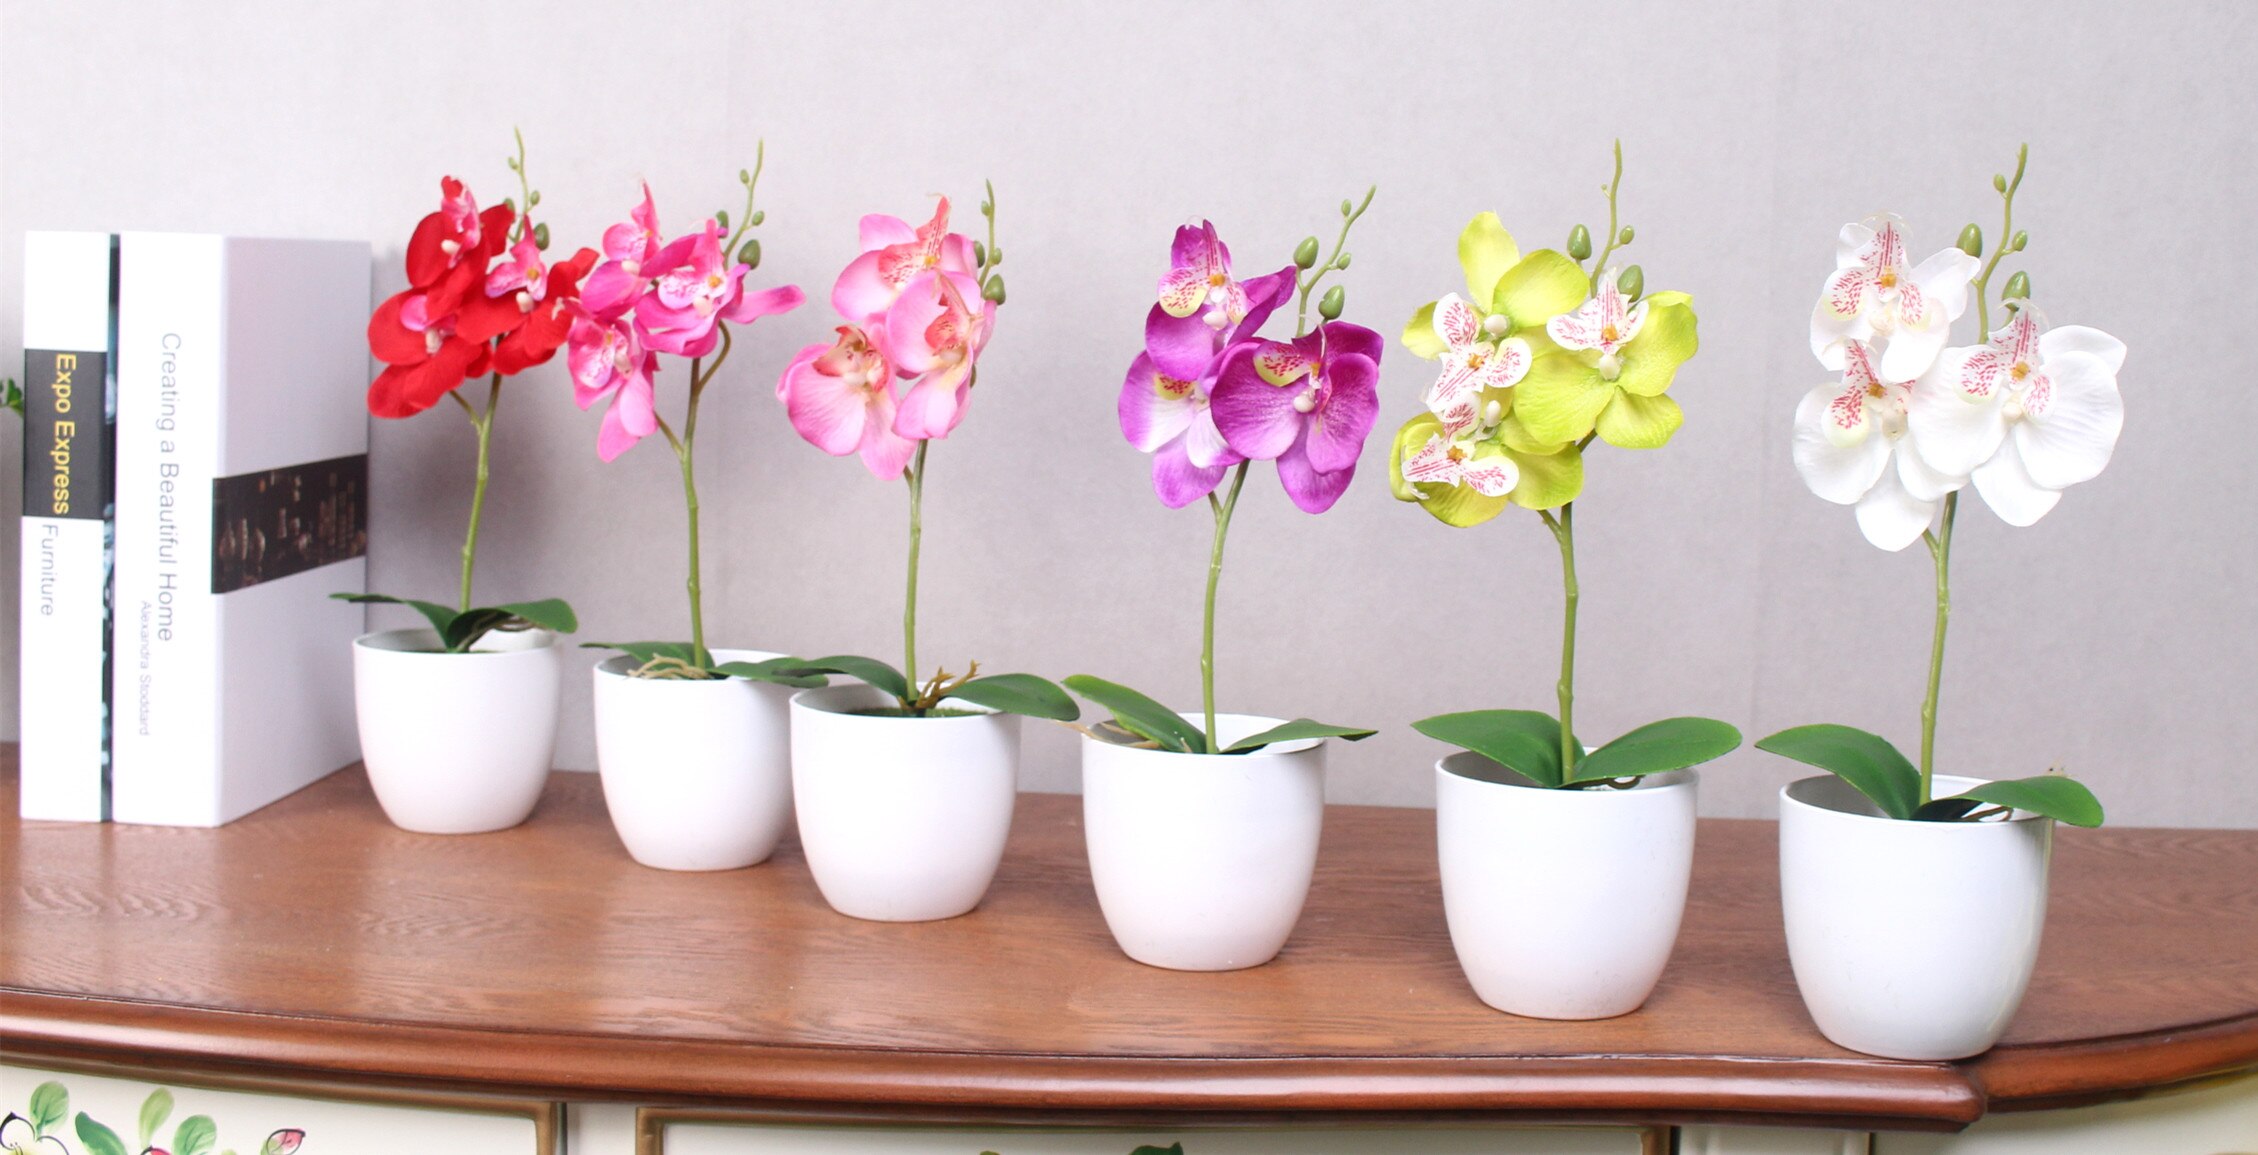 Orchids - various colors